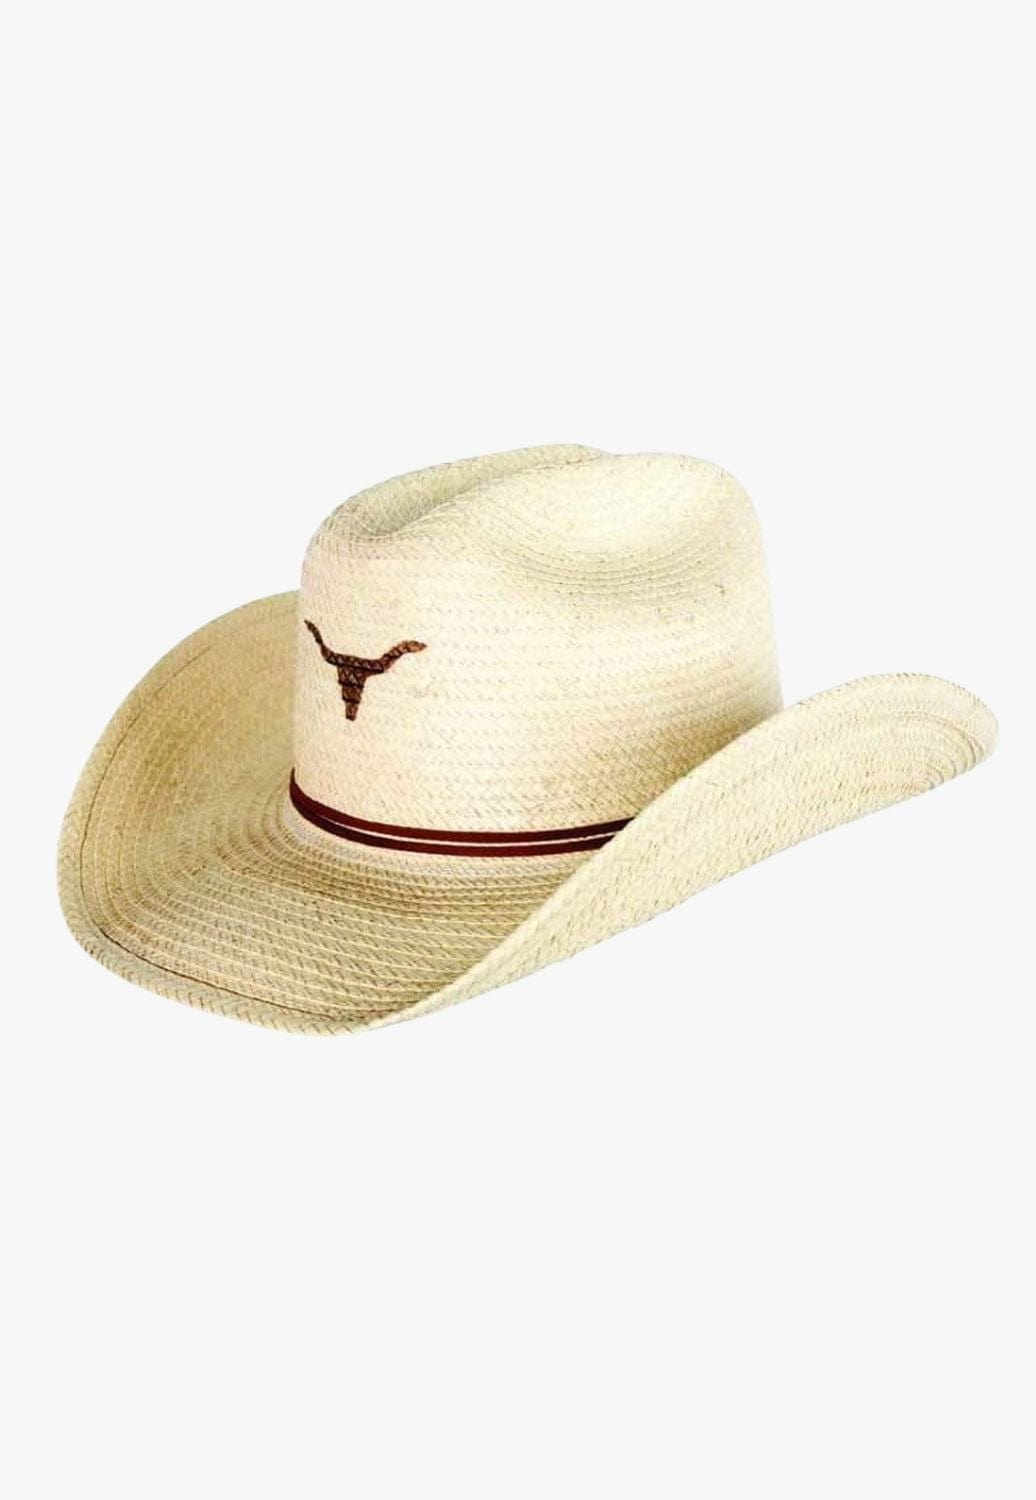 Sunbody HATS - Straw OSFA / Natural Sunbody Kids Longhorn Hat